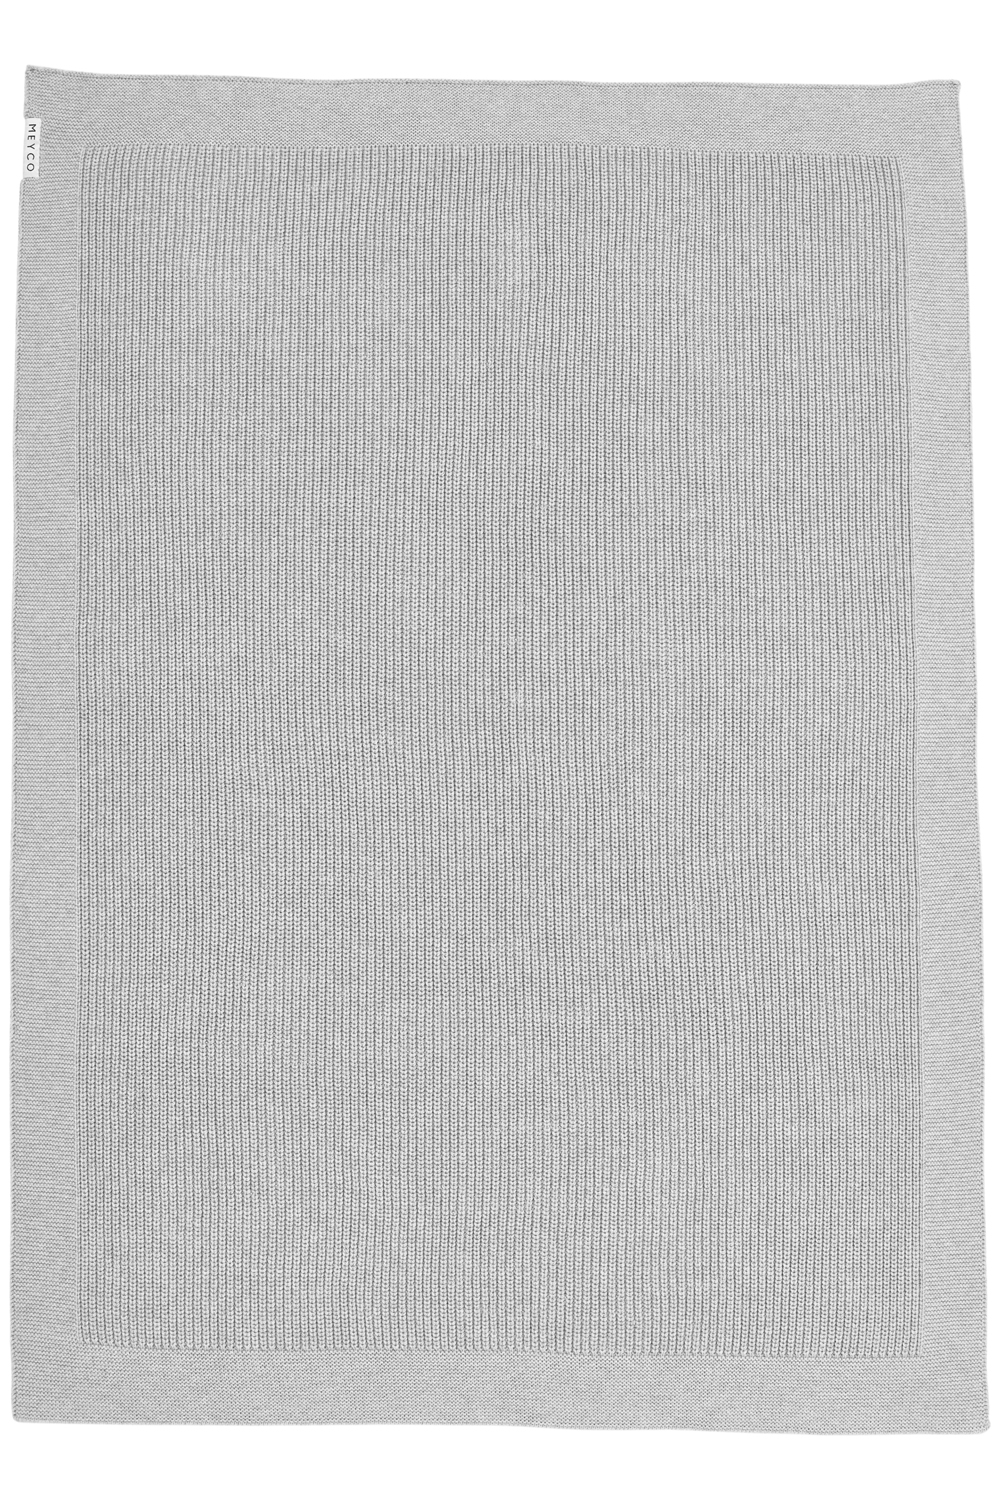 Ledikantdeken Rib - Grey Melange - 100x150cm